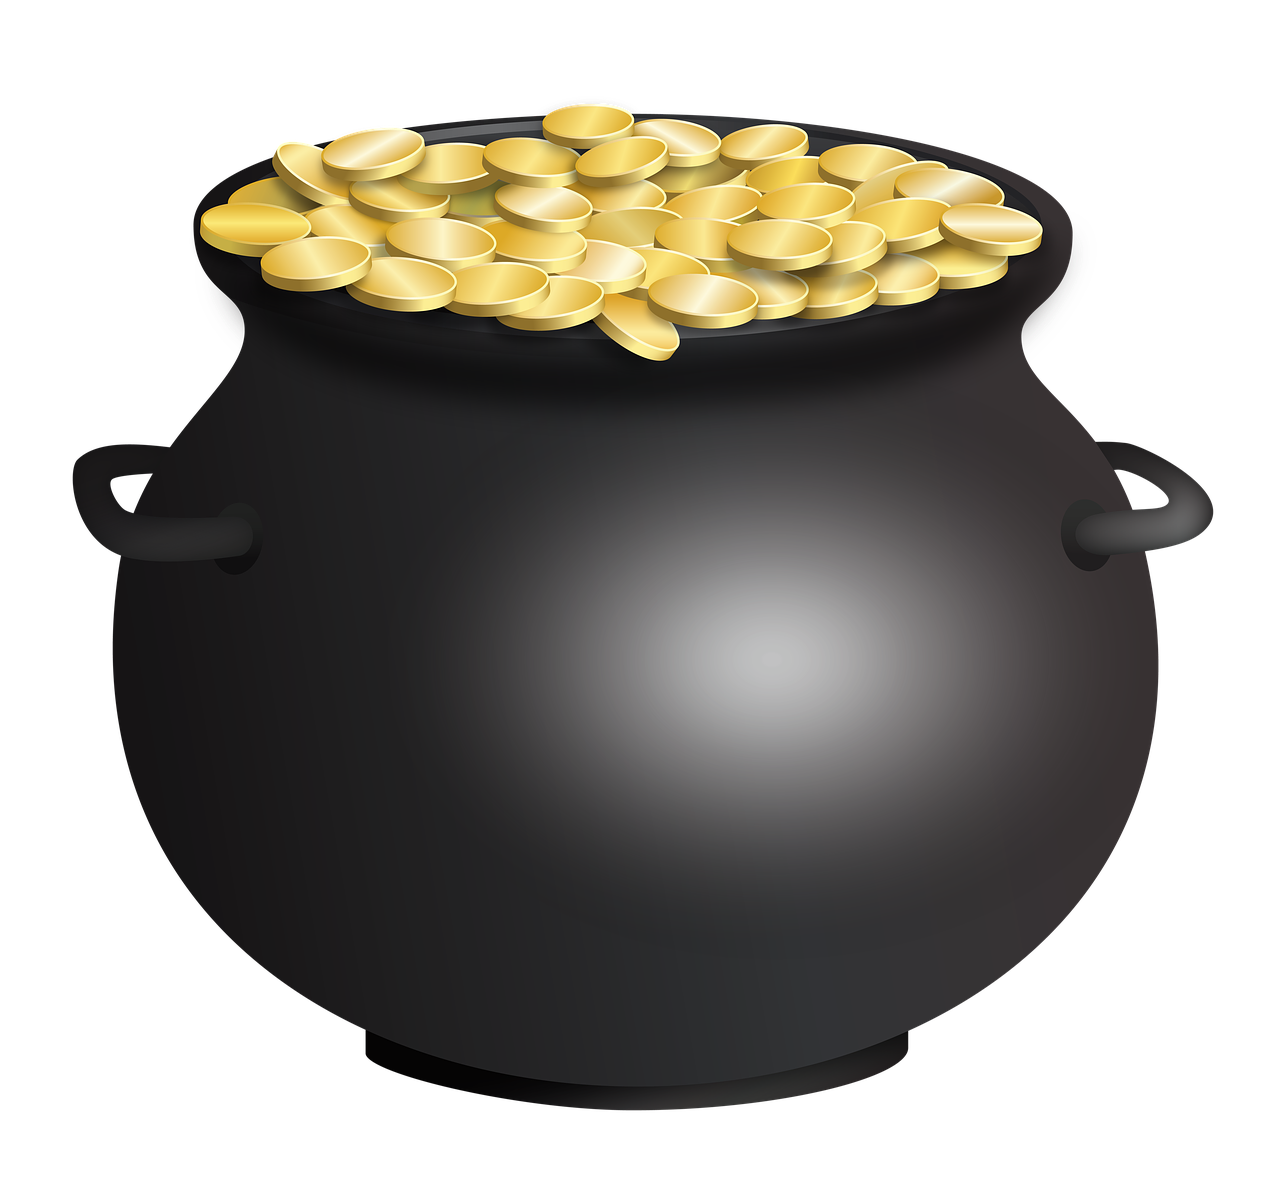 pot of gold st patrick's day cauldron free photo